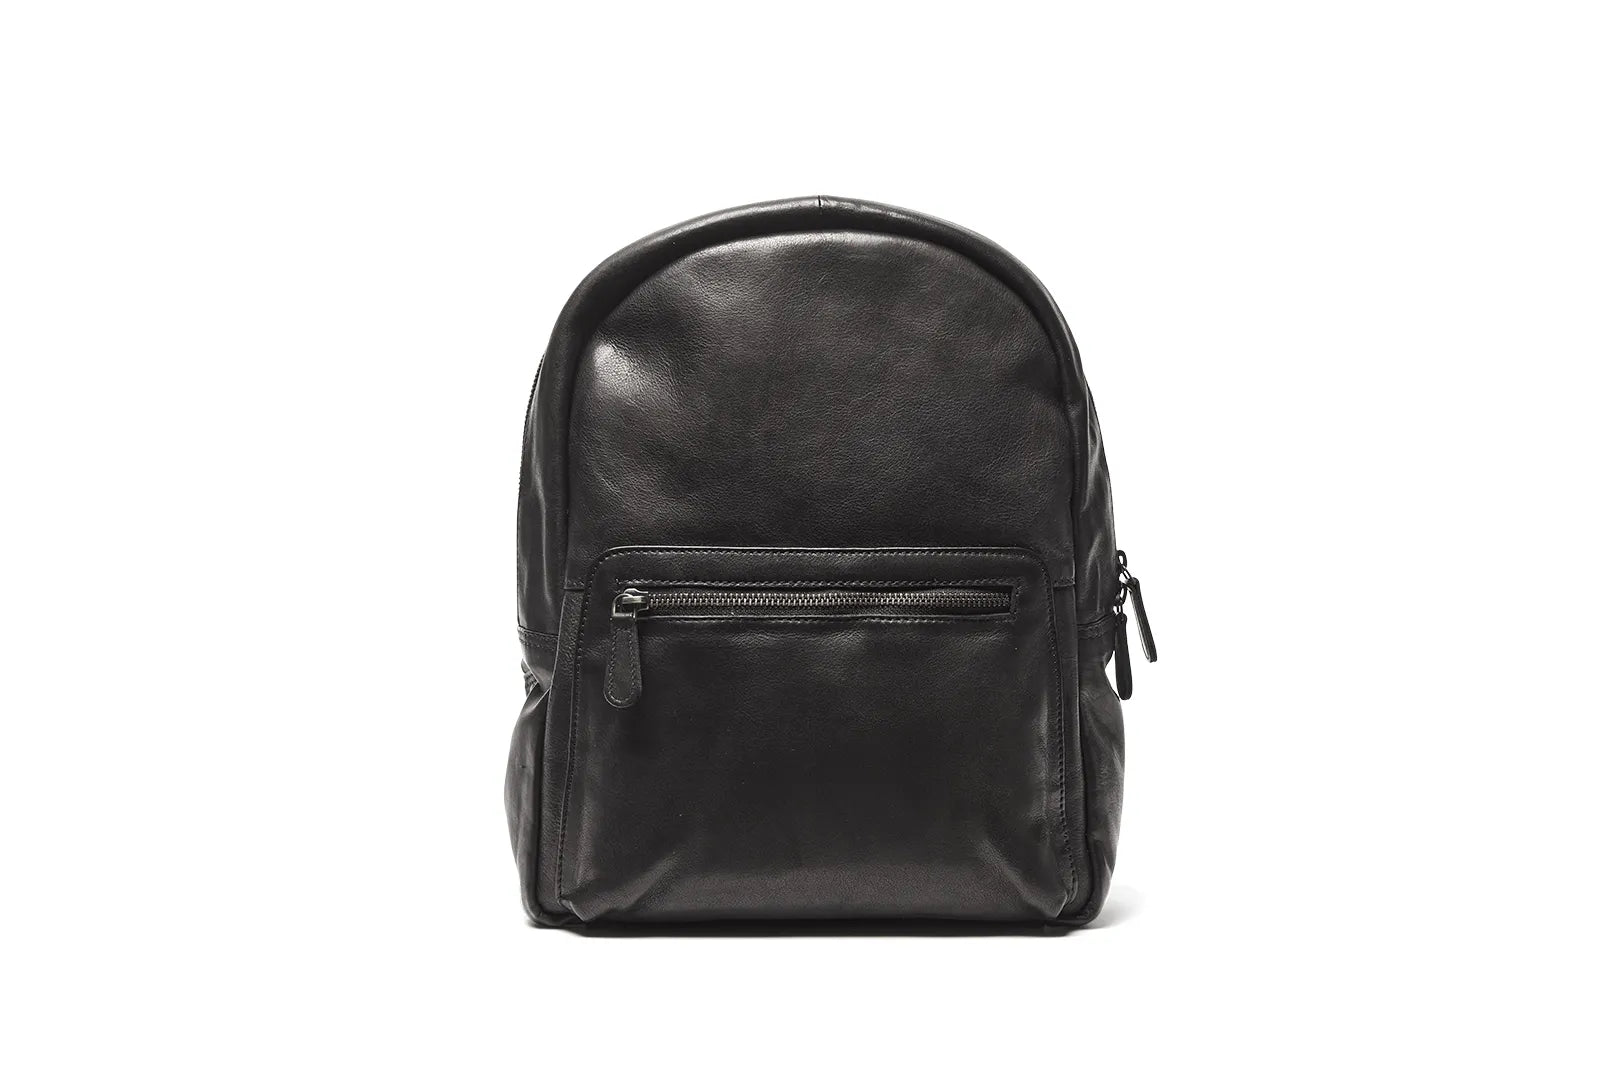 Oran - RH-2625 Bern Medium leather backpack - Black